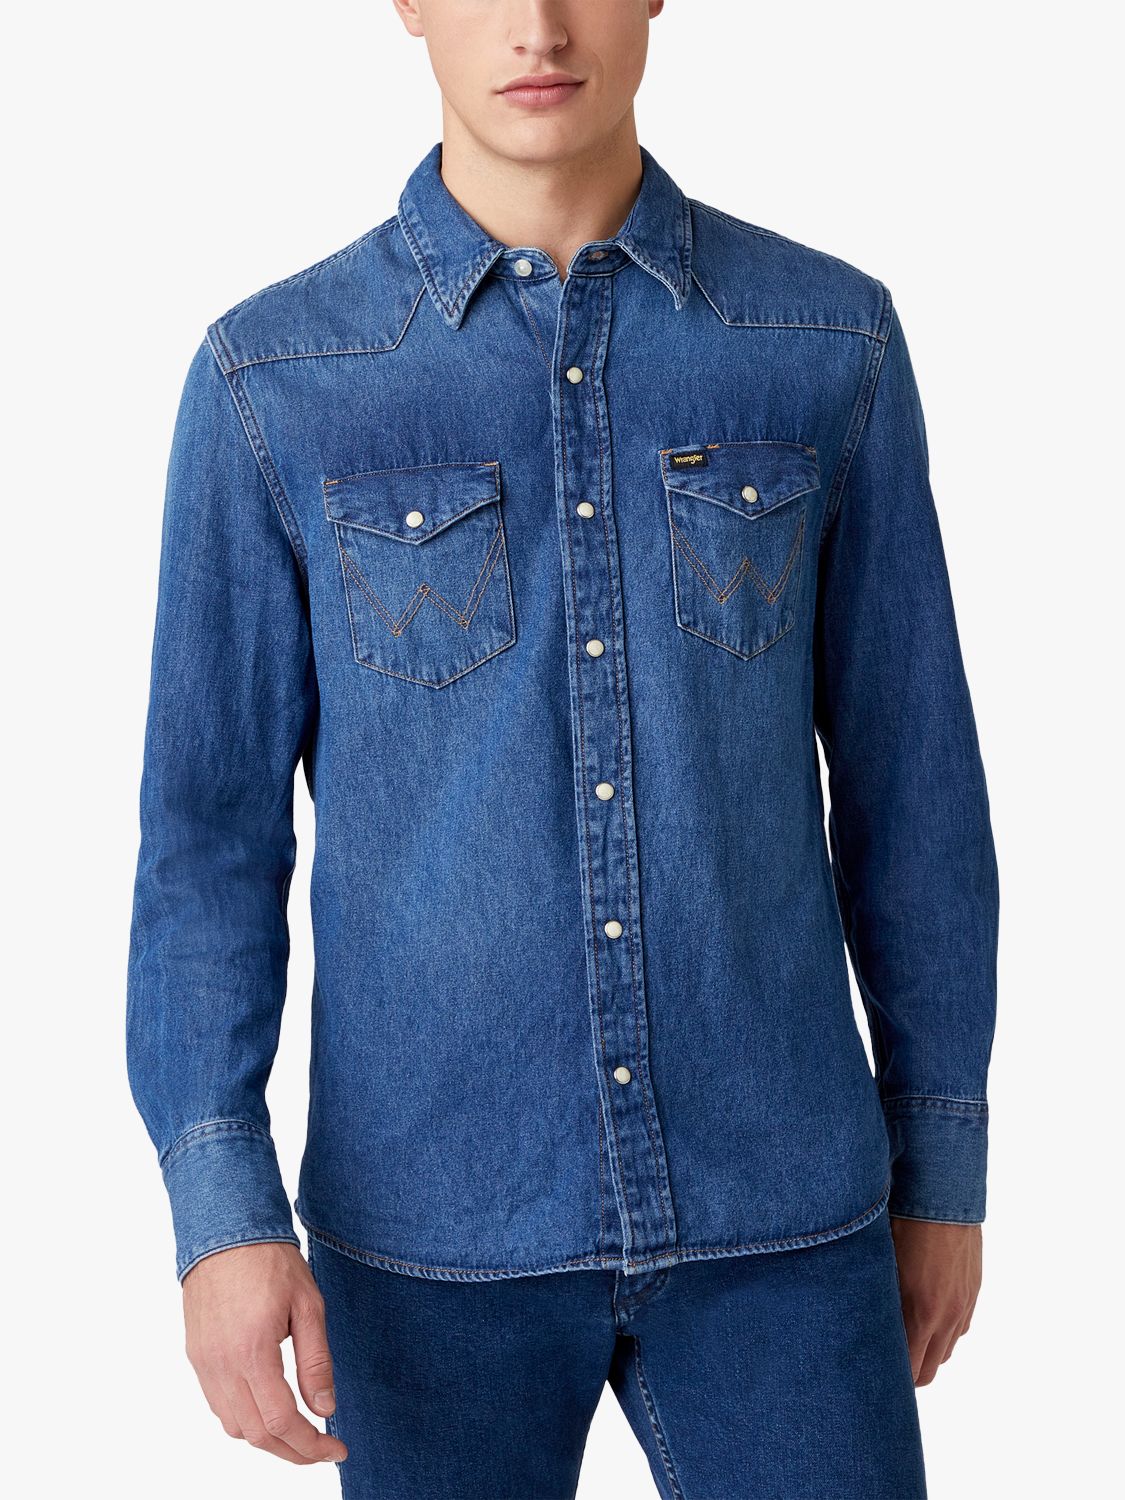 Wrangler Western 1 Year Denim Shirt, Blue, S